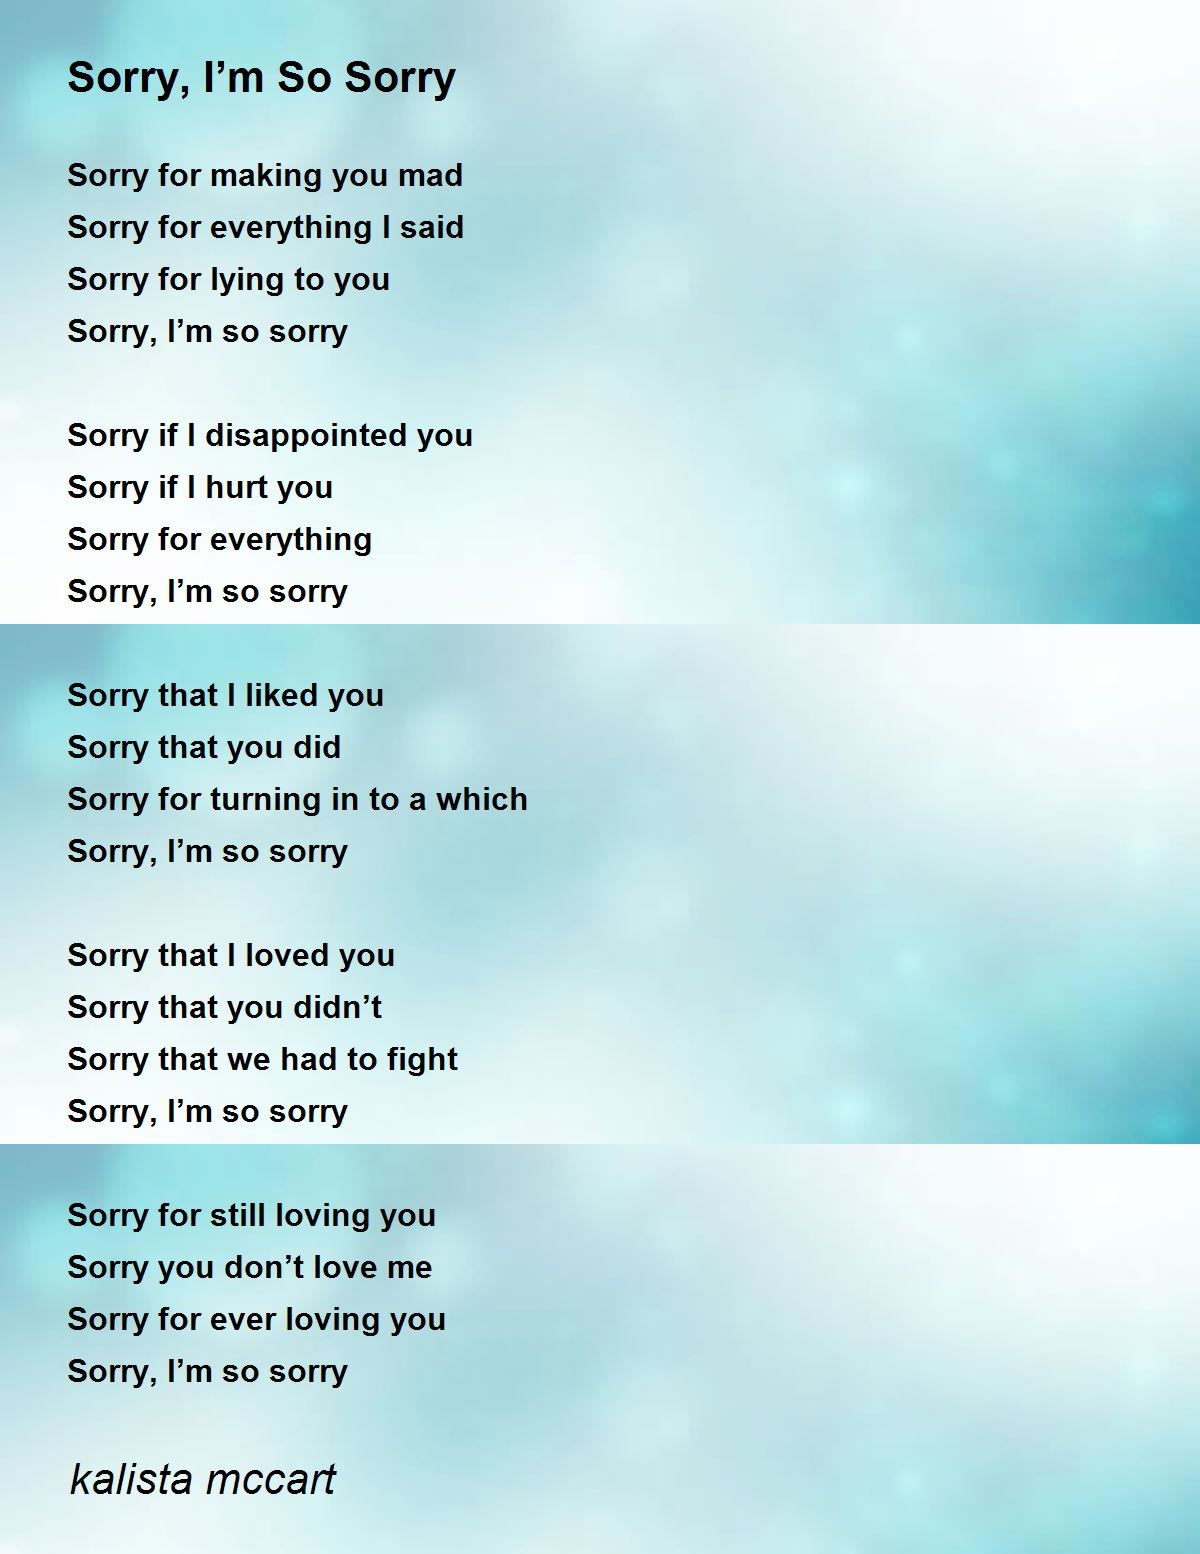 Sorry, I'm So Sorry - Sorry, I'm So Sorry Poem by kalista mccart